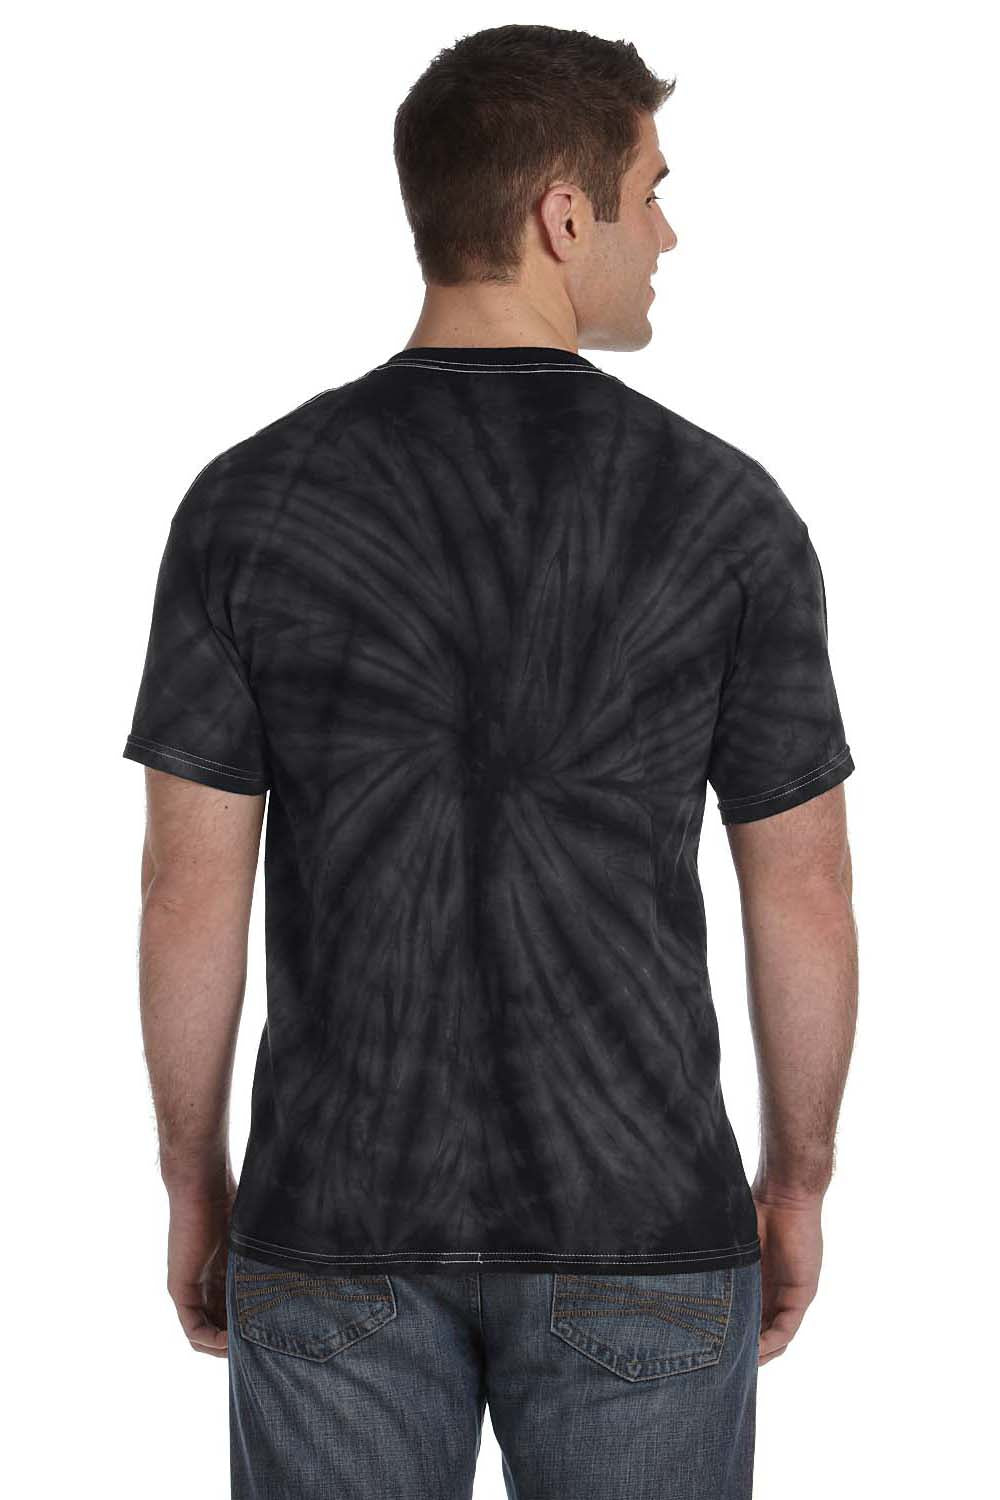 Tie-Dye CD101 Mens Short Sleeve Crewneck T-Shirt Black Back